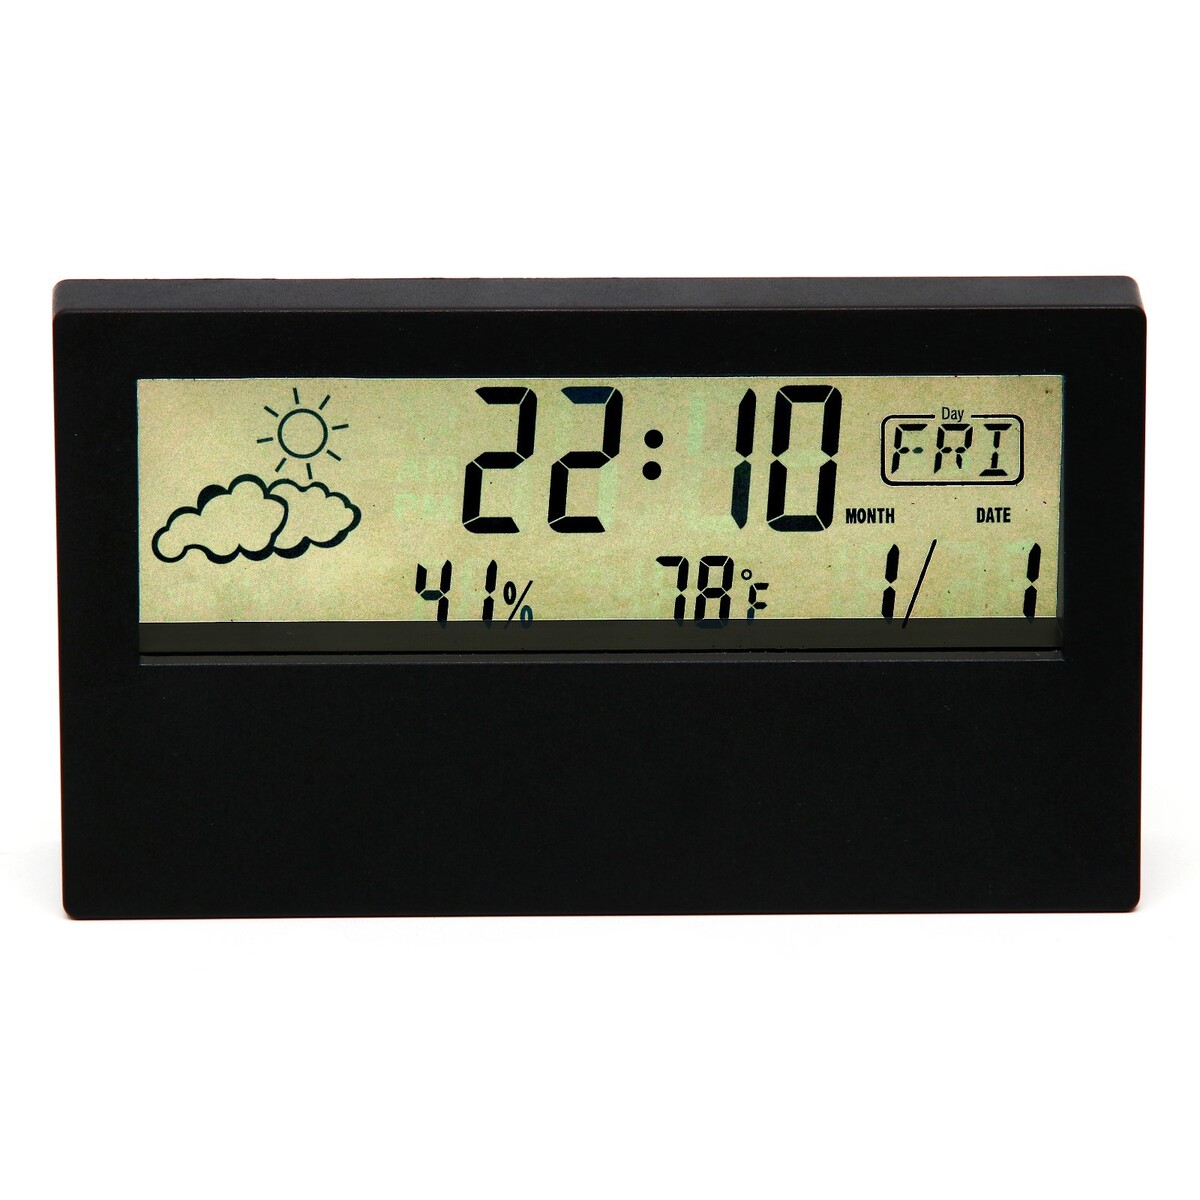 Часы - будильник электронные настольные: термометр, календарь, гигрометр, 13.3 х 7.4 см No brand